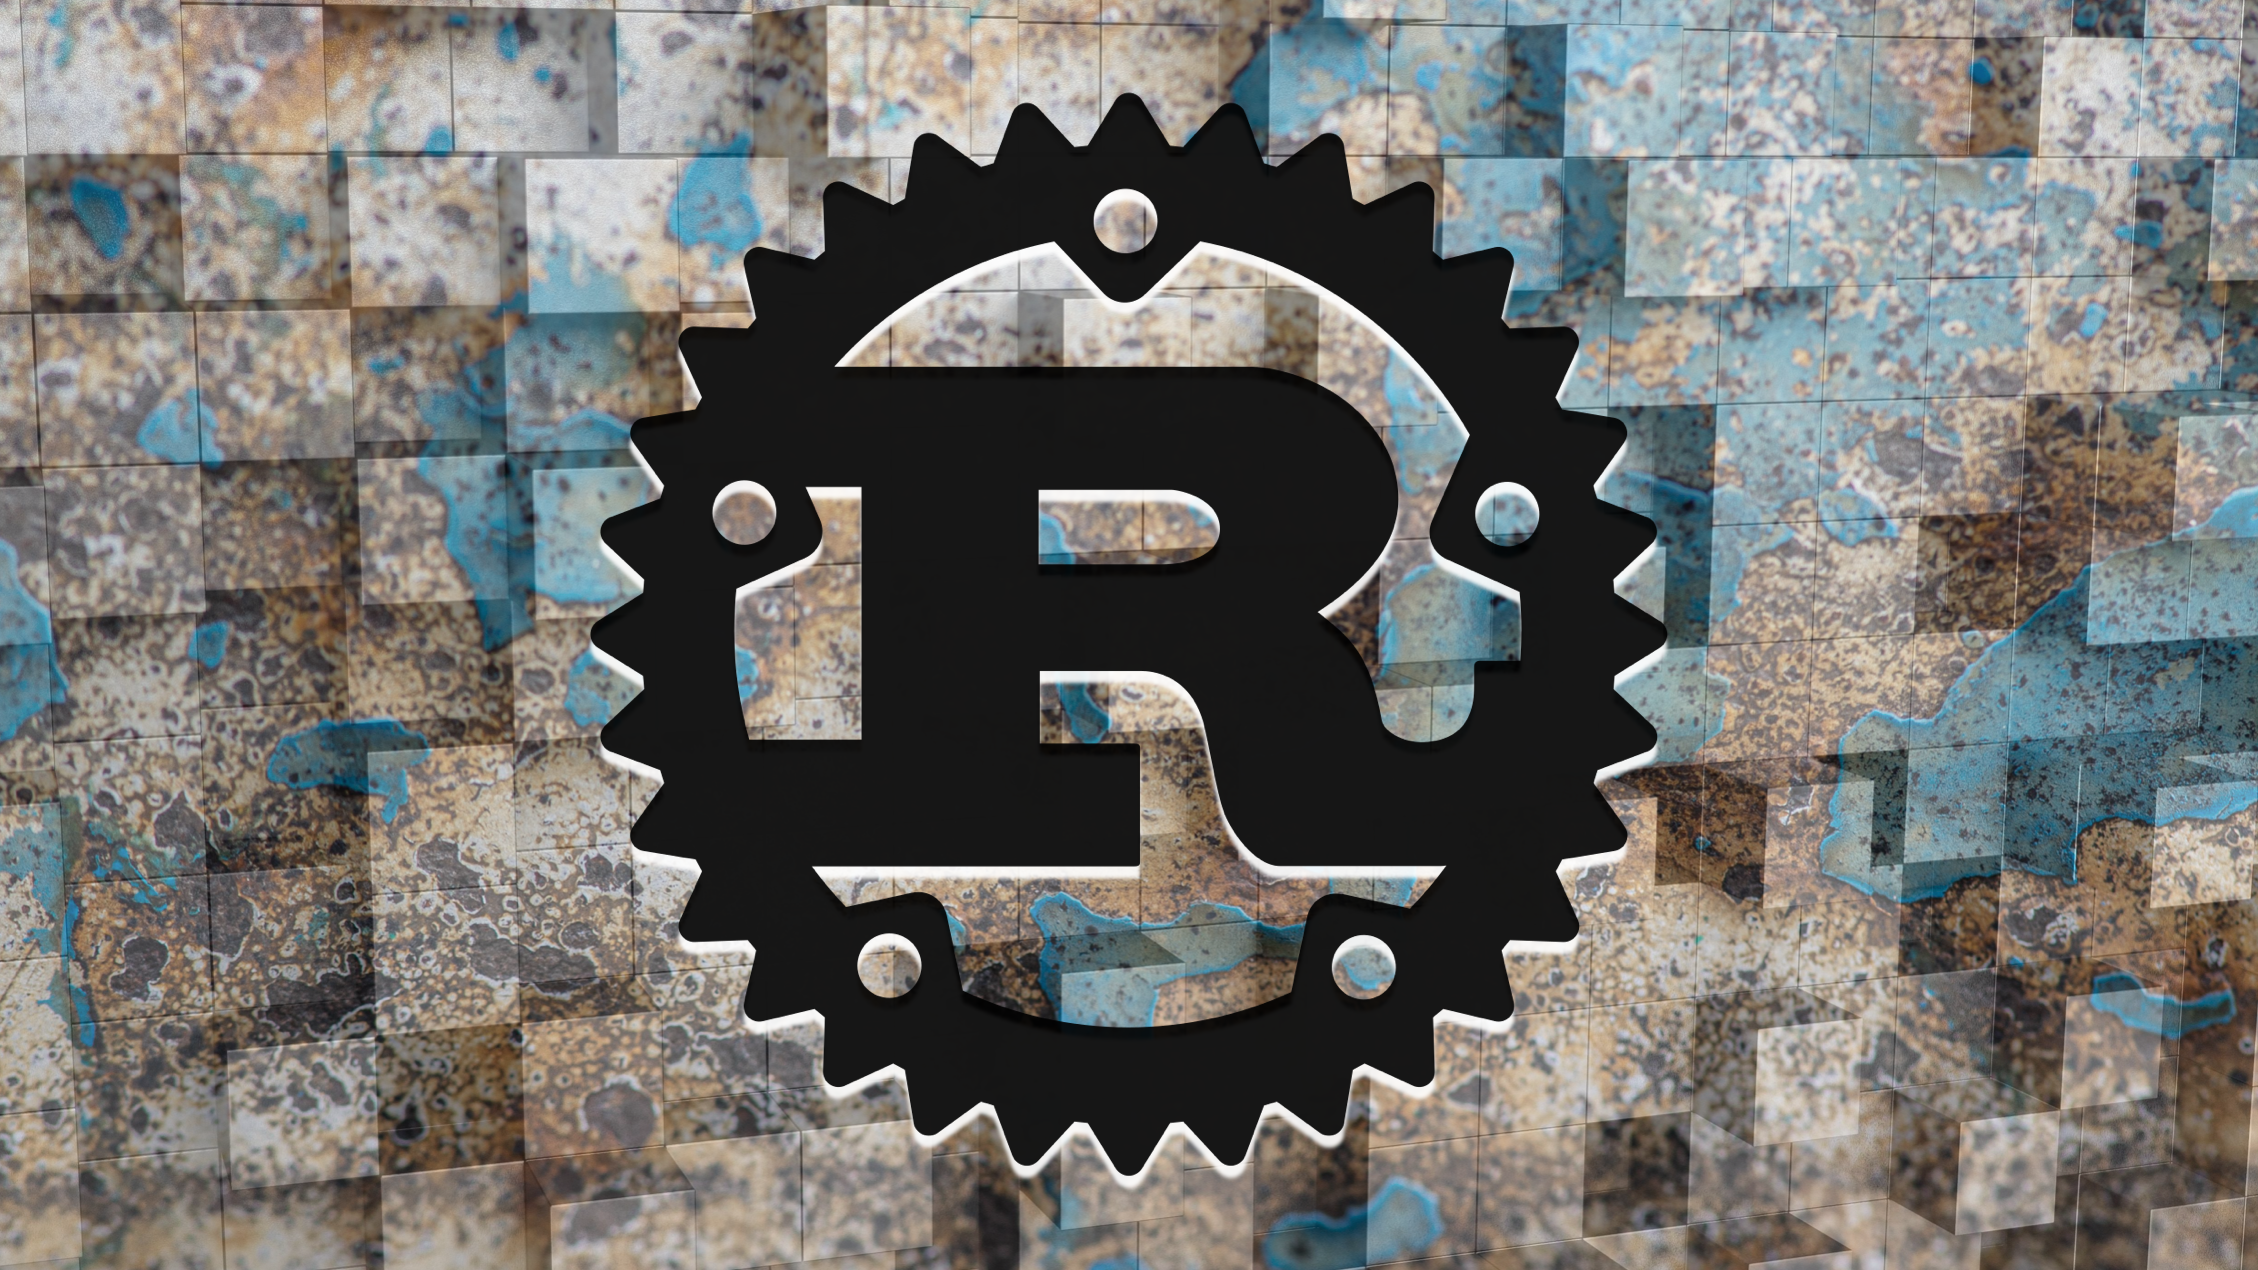 Rust Programming: The Complete Developer's Guide